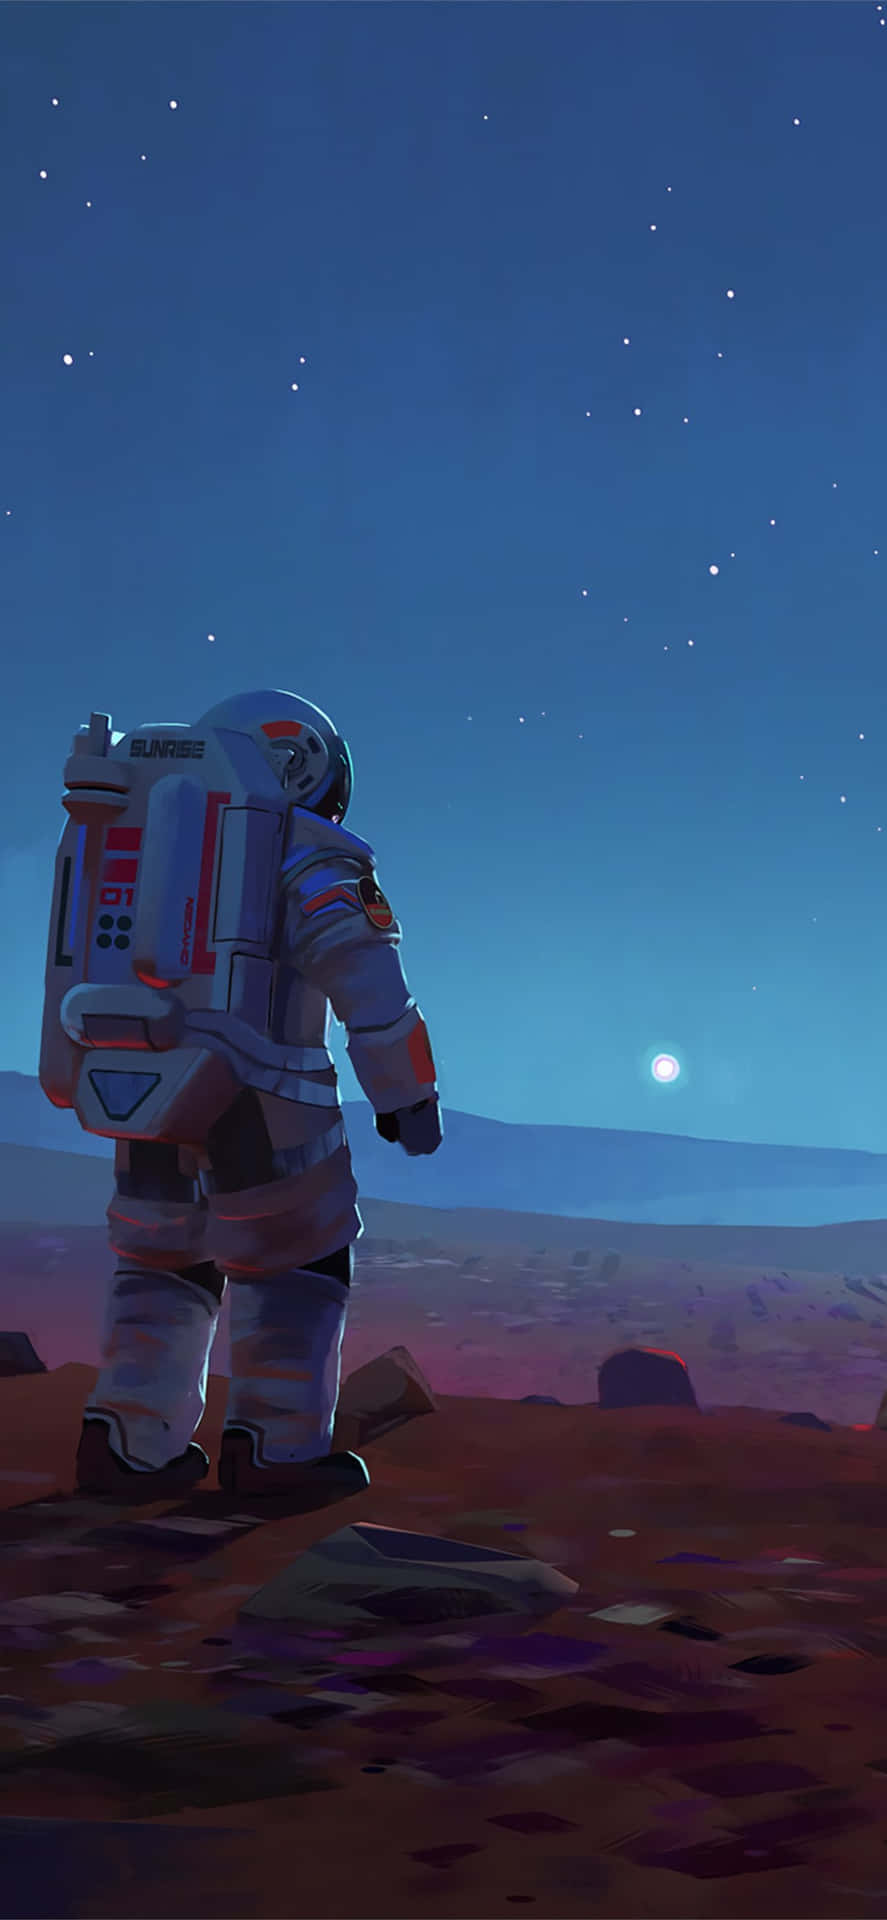 En astronaut står på den røde planet. Wallpaper